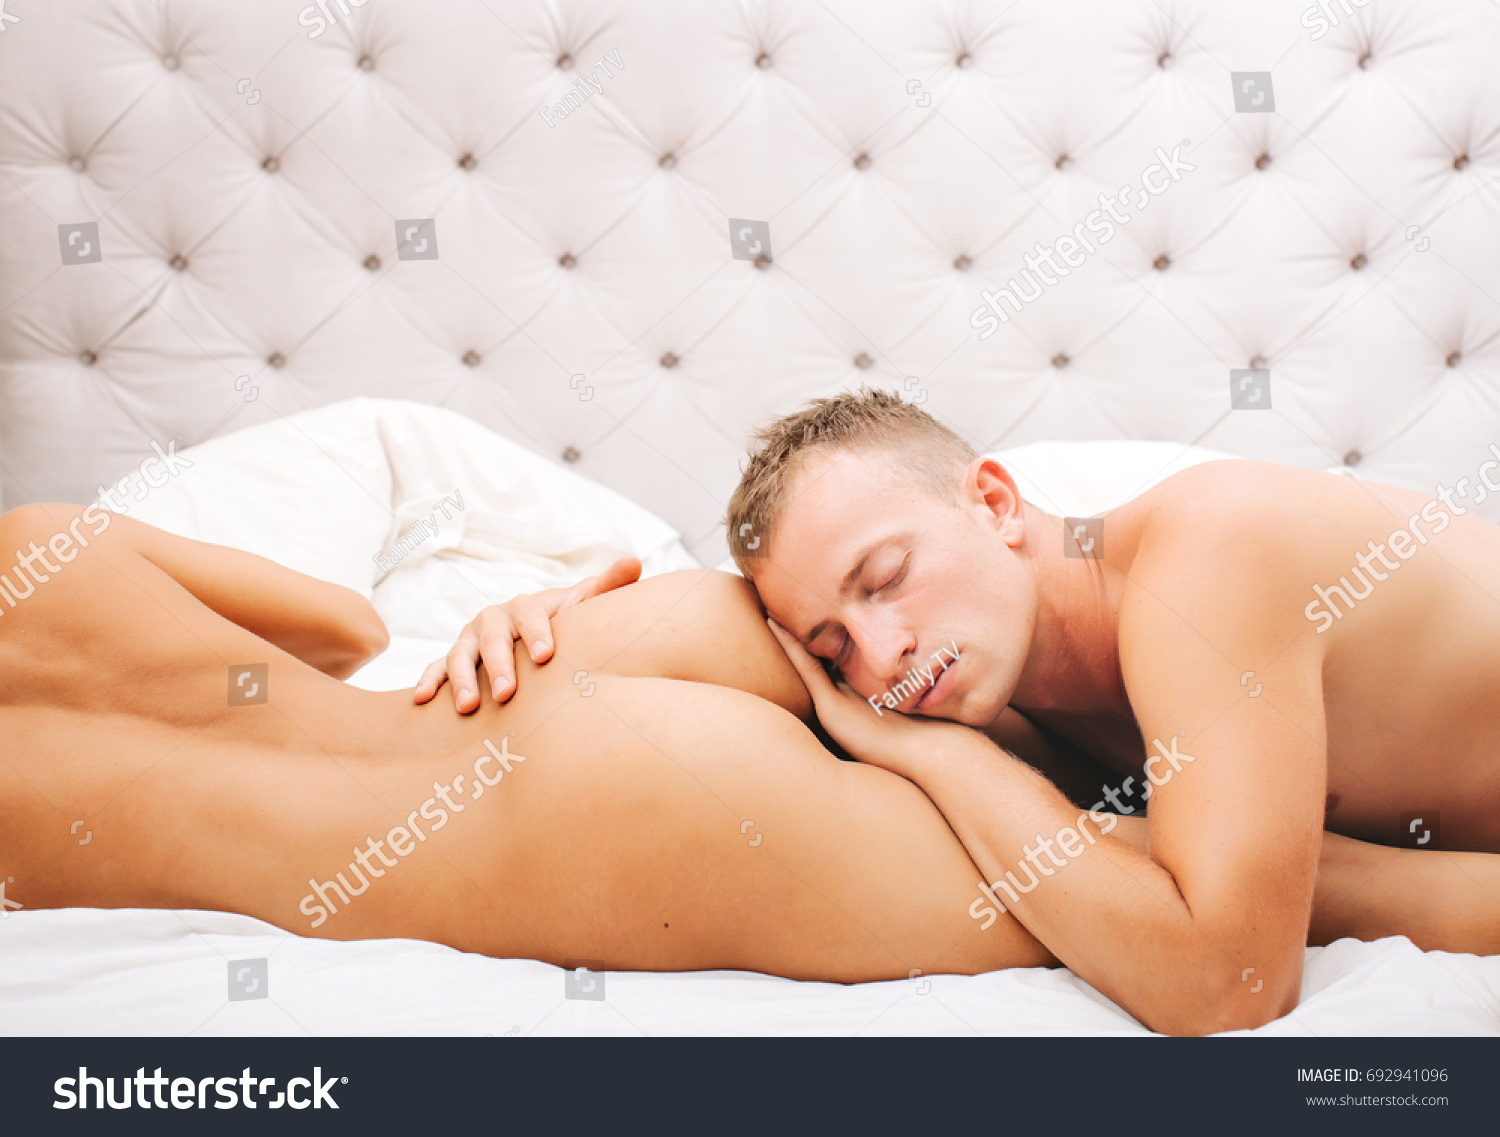 Sleeping Sex Pics